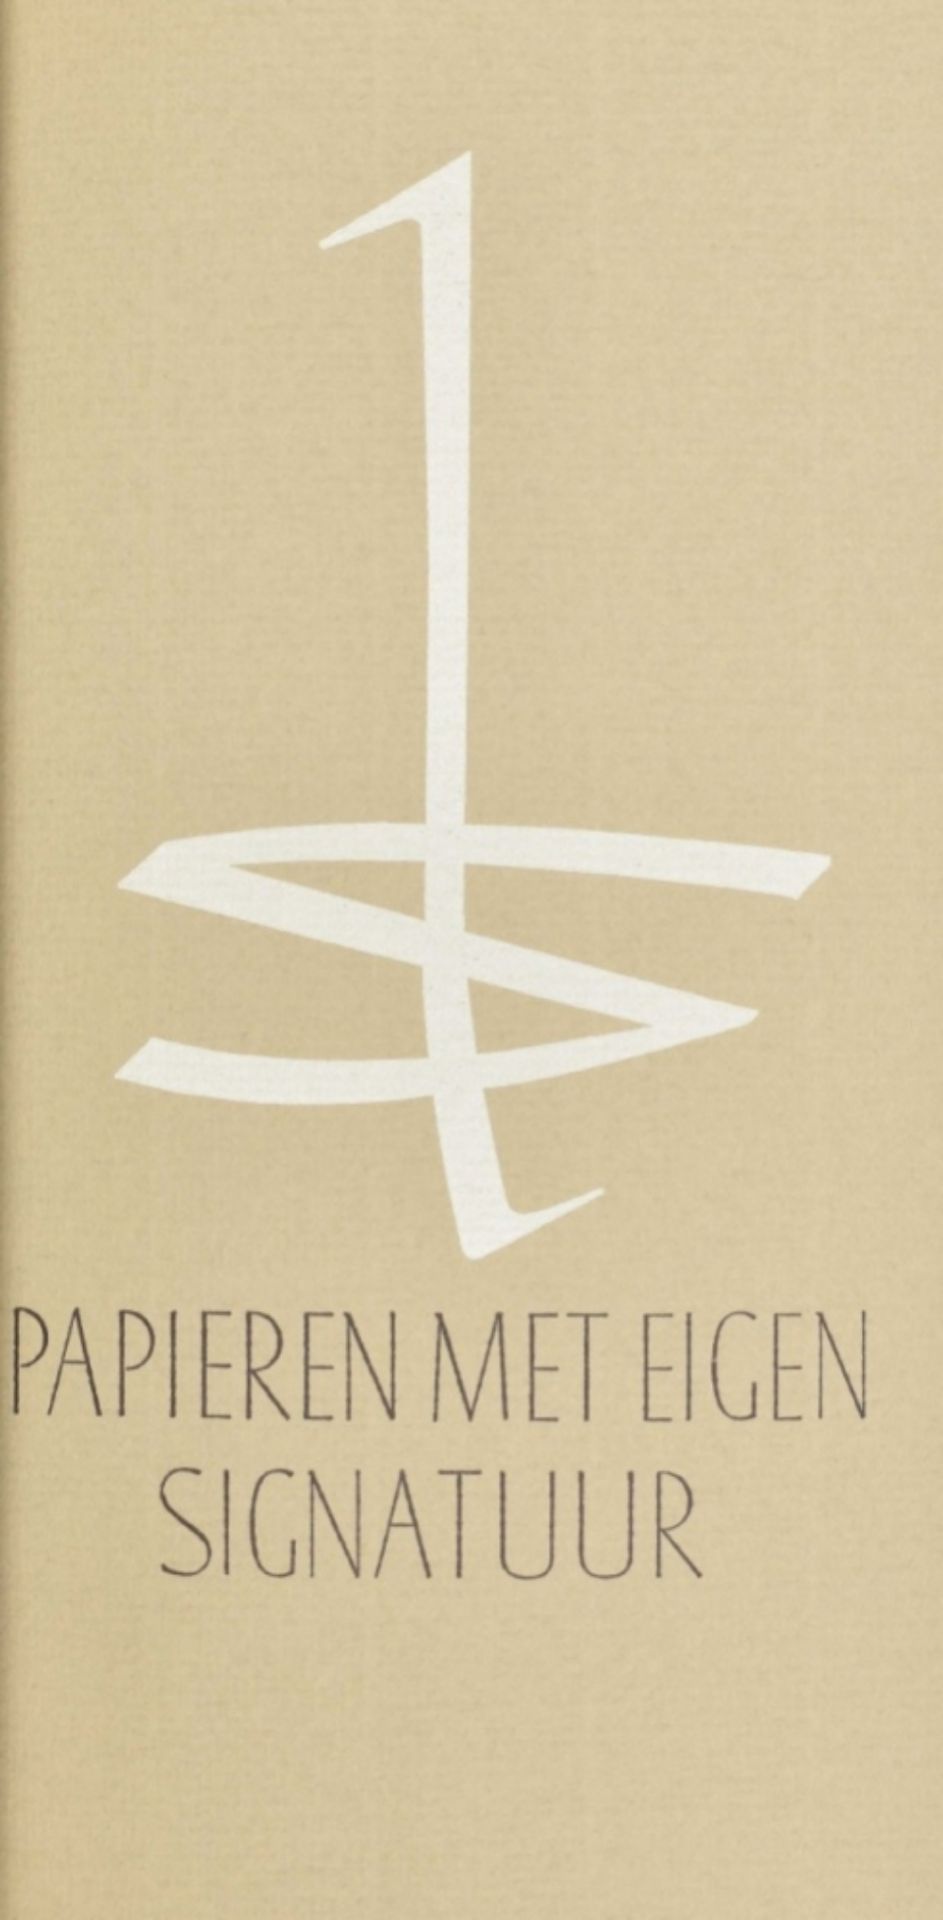 G.H. Bührmann's papiergroothandel - Image 2 of 10